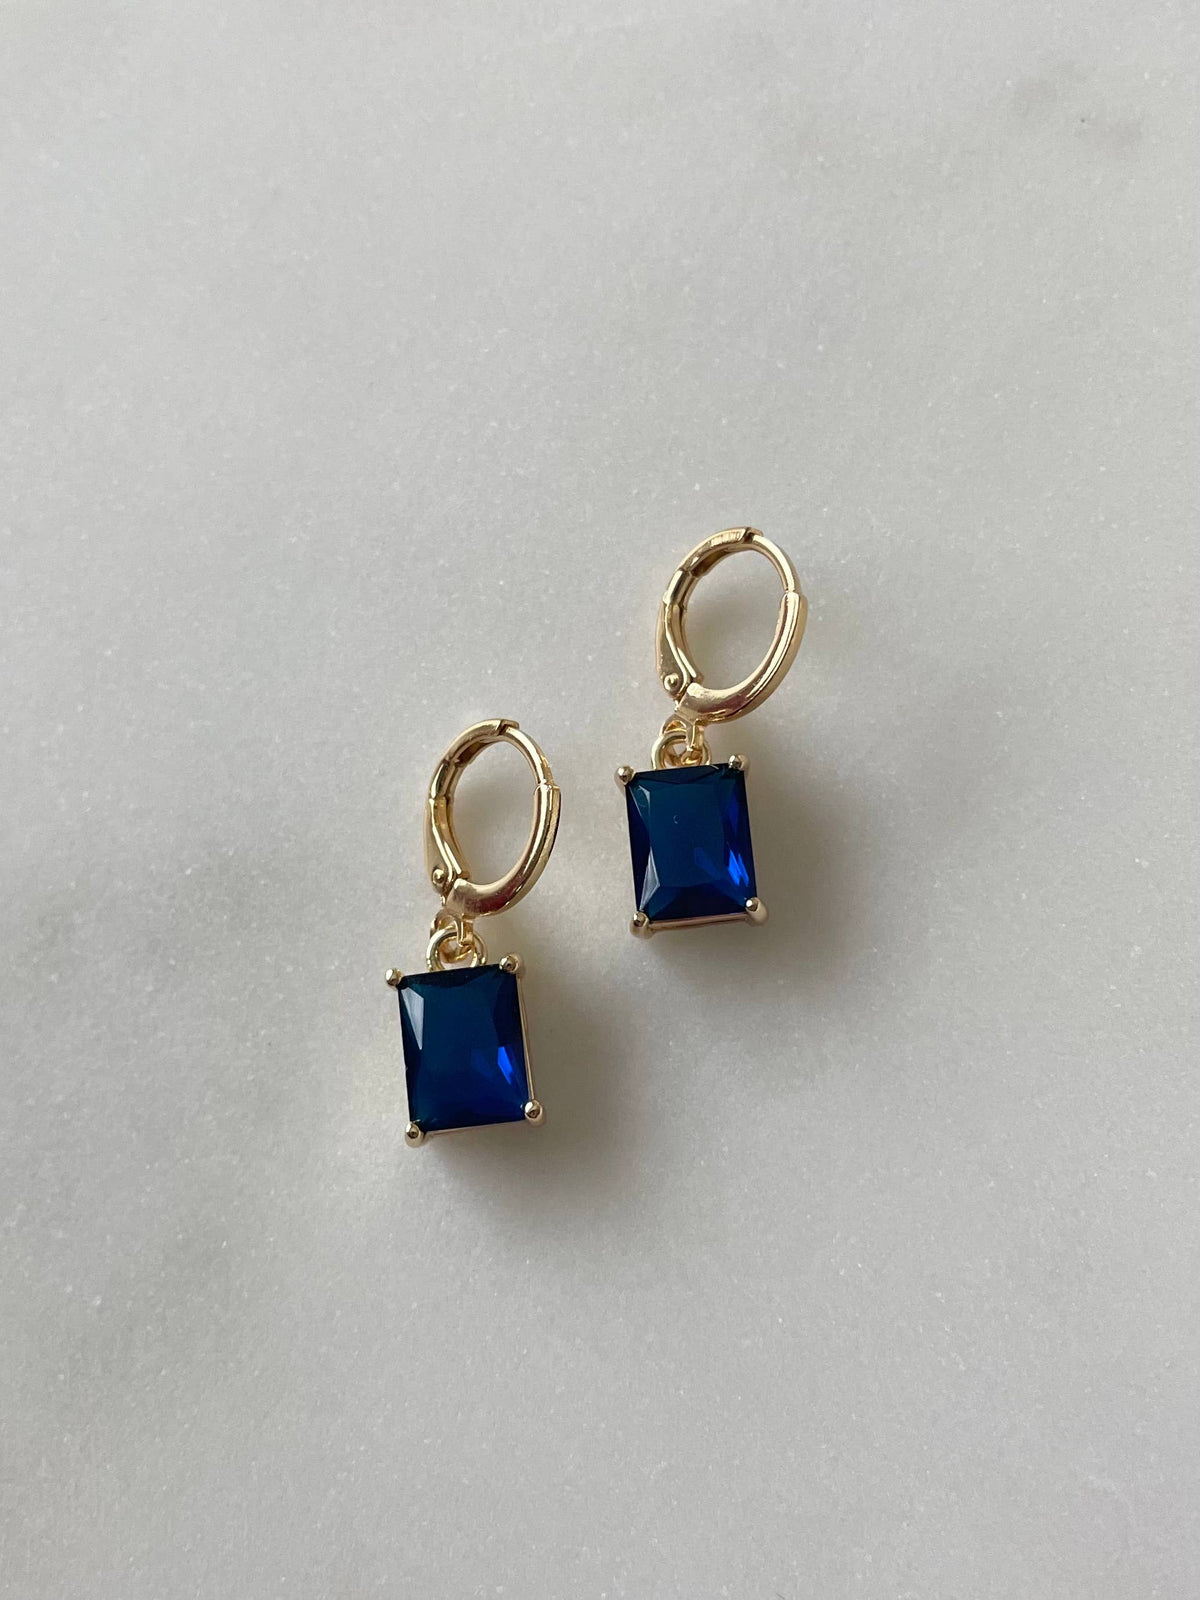 Blue Stone Huggies. Little Gemstone earrings Gold Filled